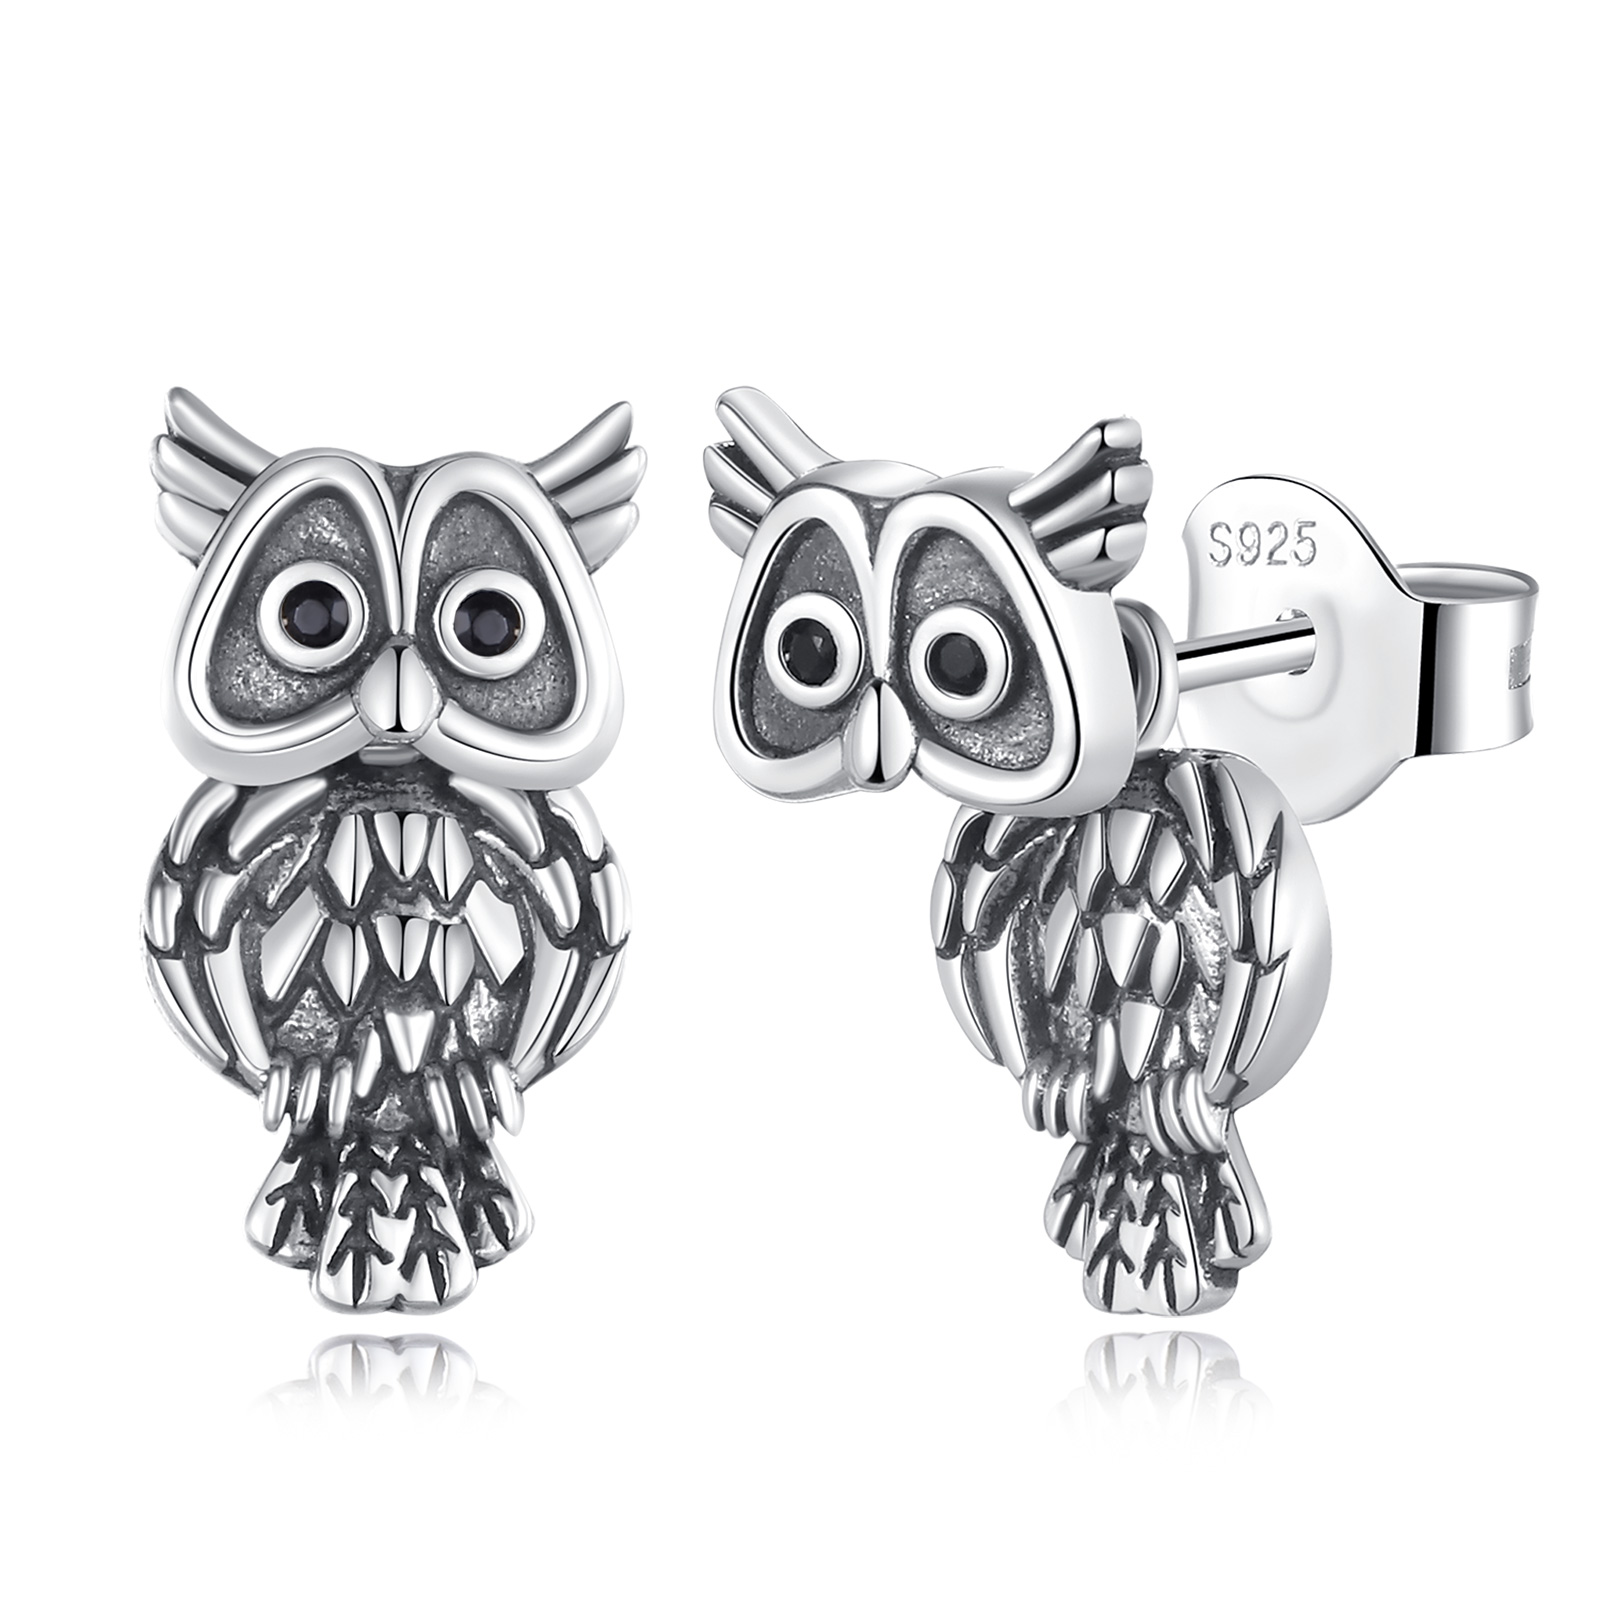 Merryshine unique design retro fashion jewelry 925 sterling silver boho style cute bird owl stud earrings